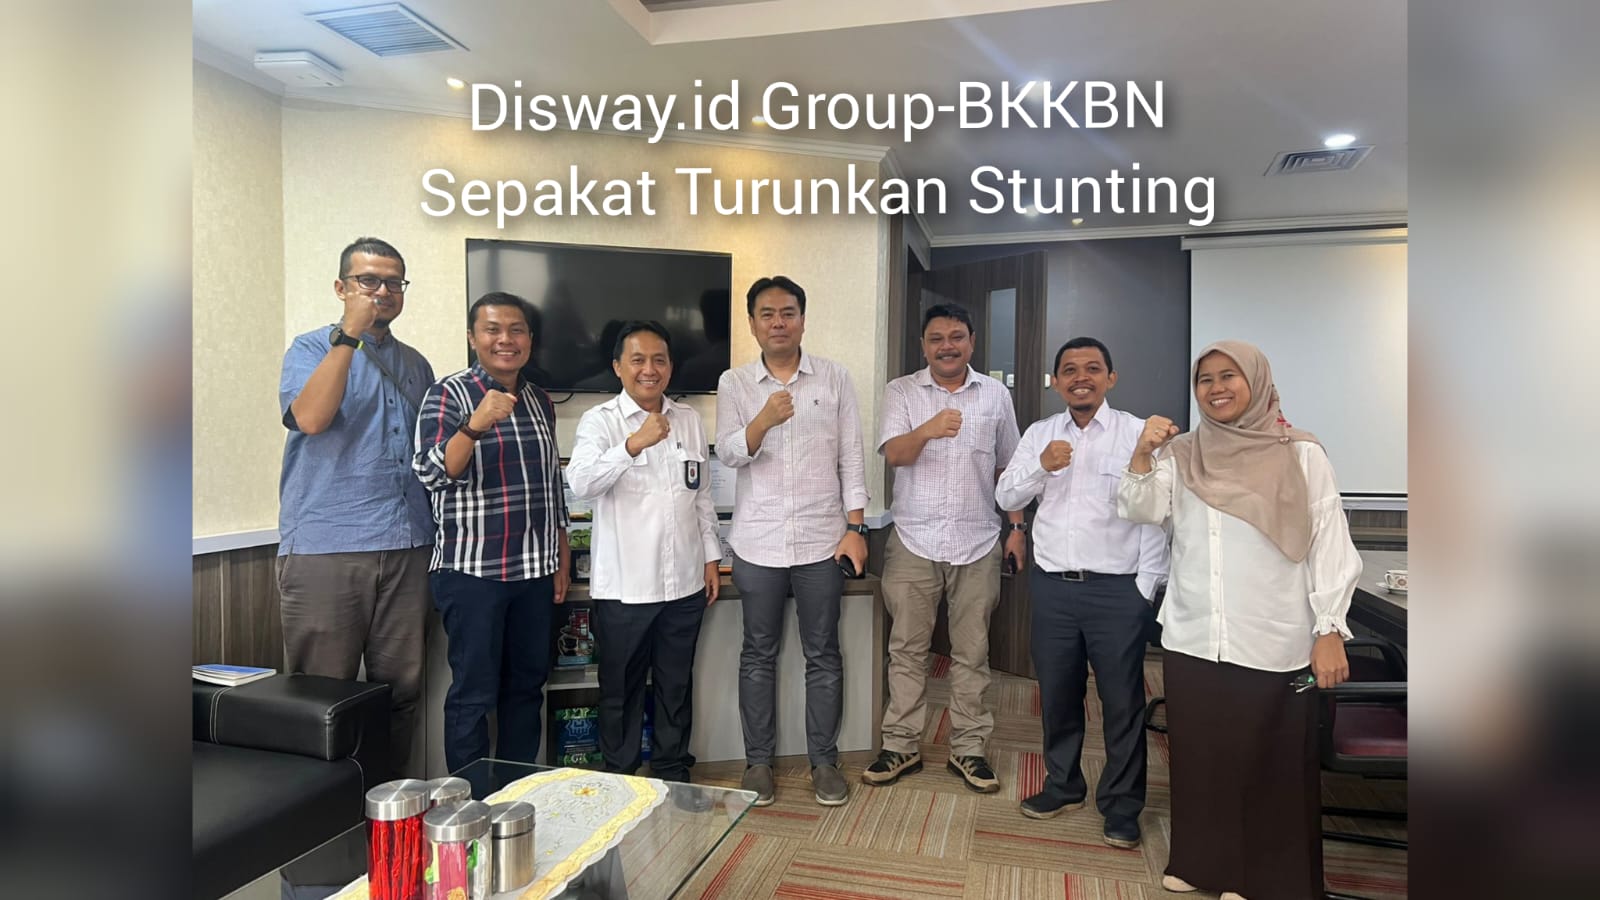 Disway.id Group-BKKBN Sepakat Kerjasama Turunkan Stunting